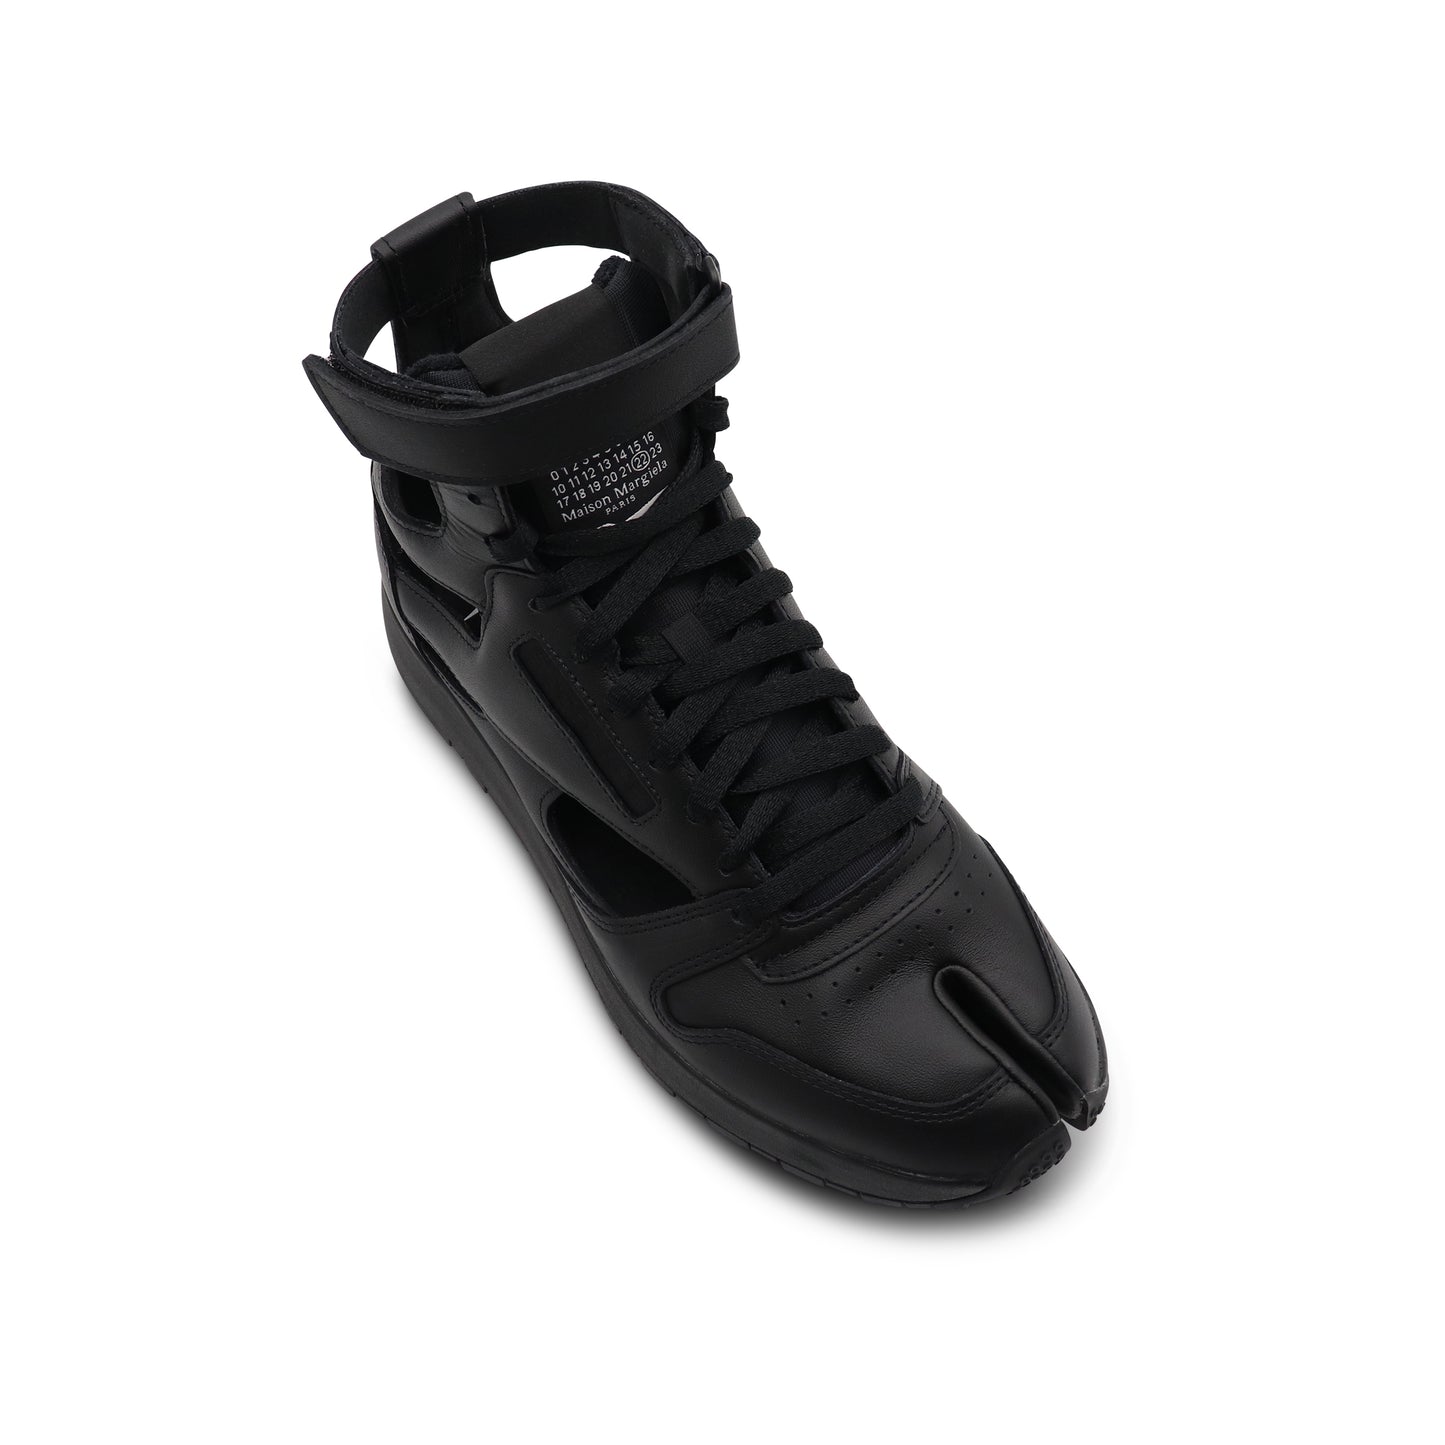 Maison Margiela x Reebok Tabi Gladiator High Sneaker in Black